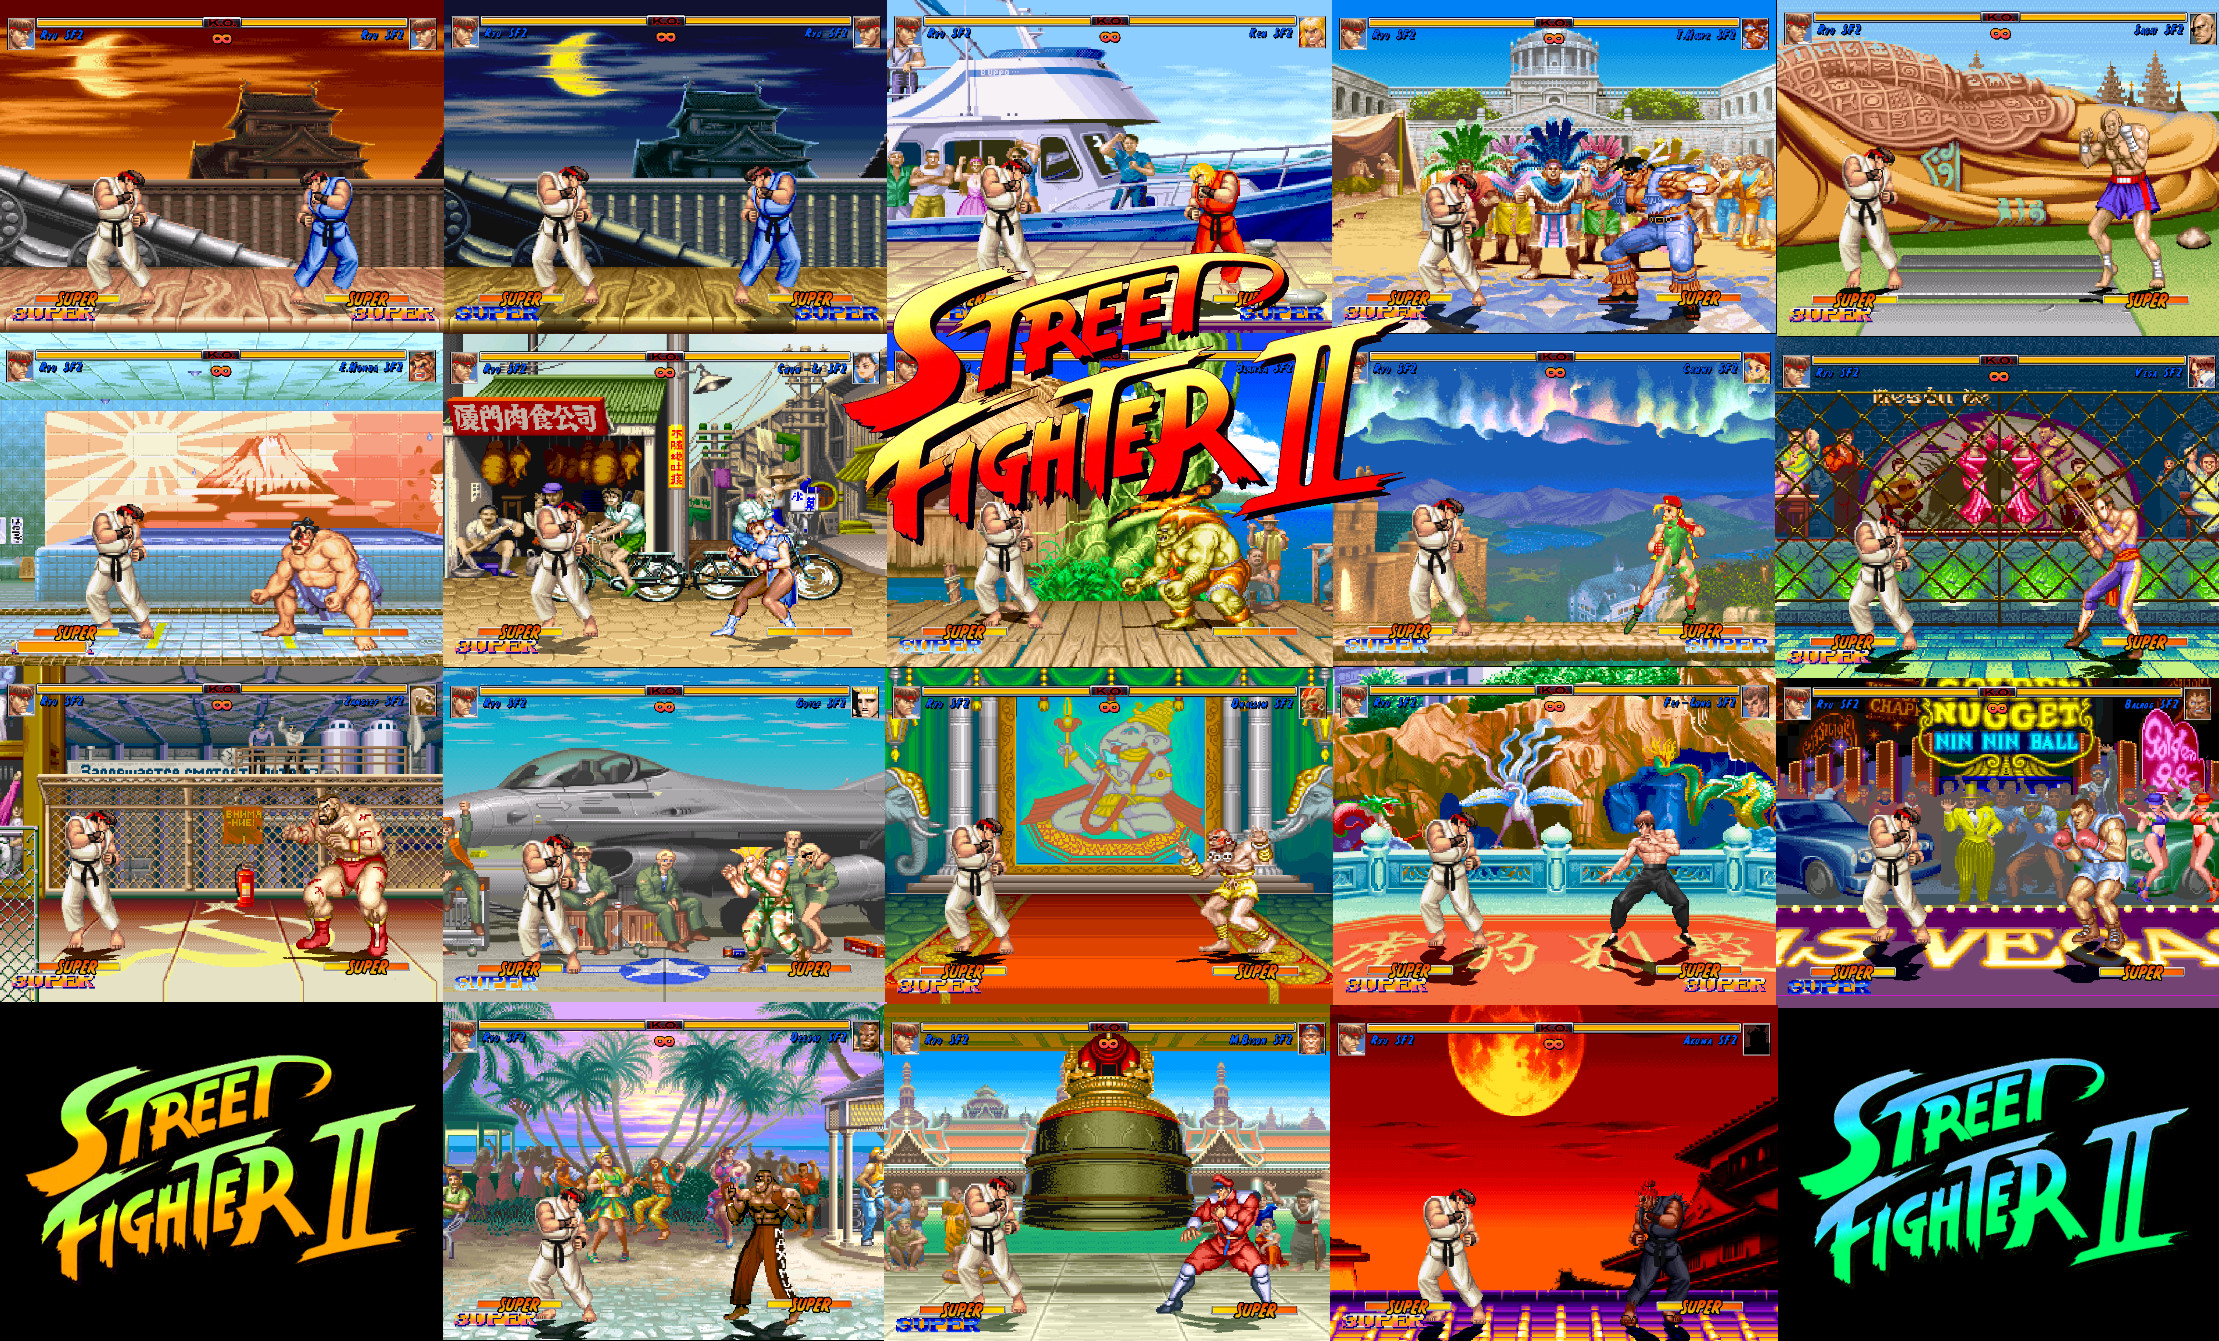 Vega Street Fighter 2 [M.U.G.E.N] [Mods]